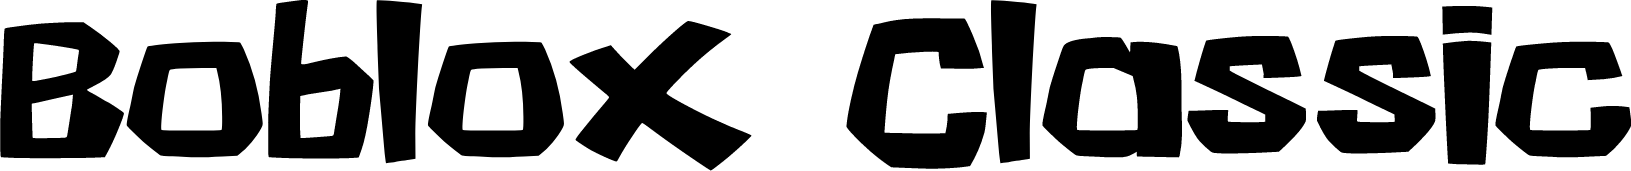 Pixilart - Old roblox logo by TonyRonyFony